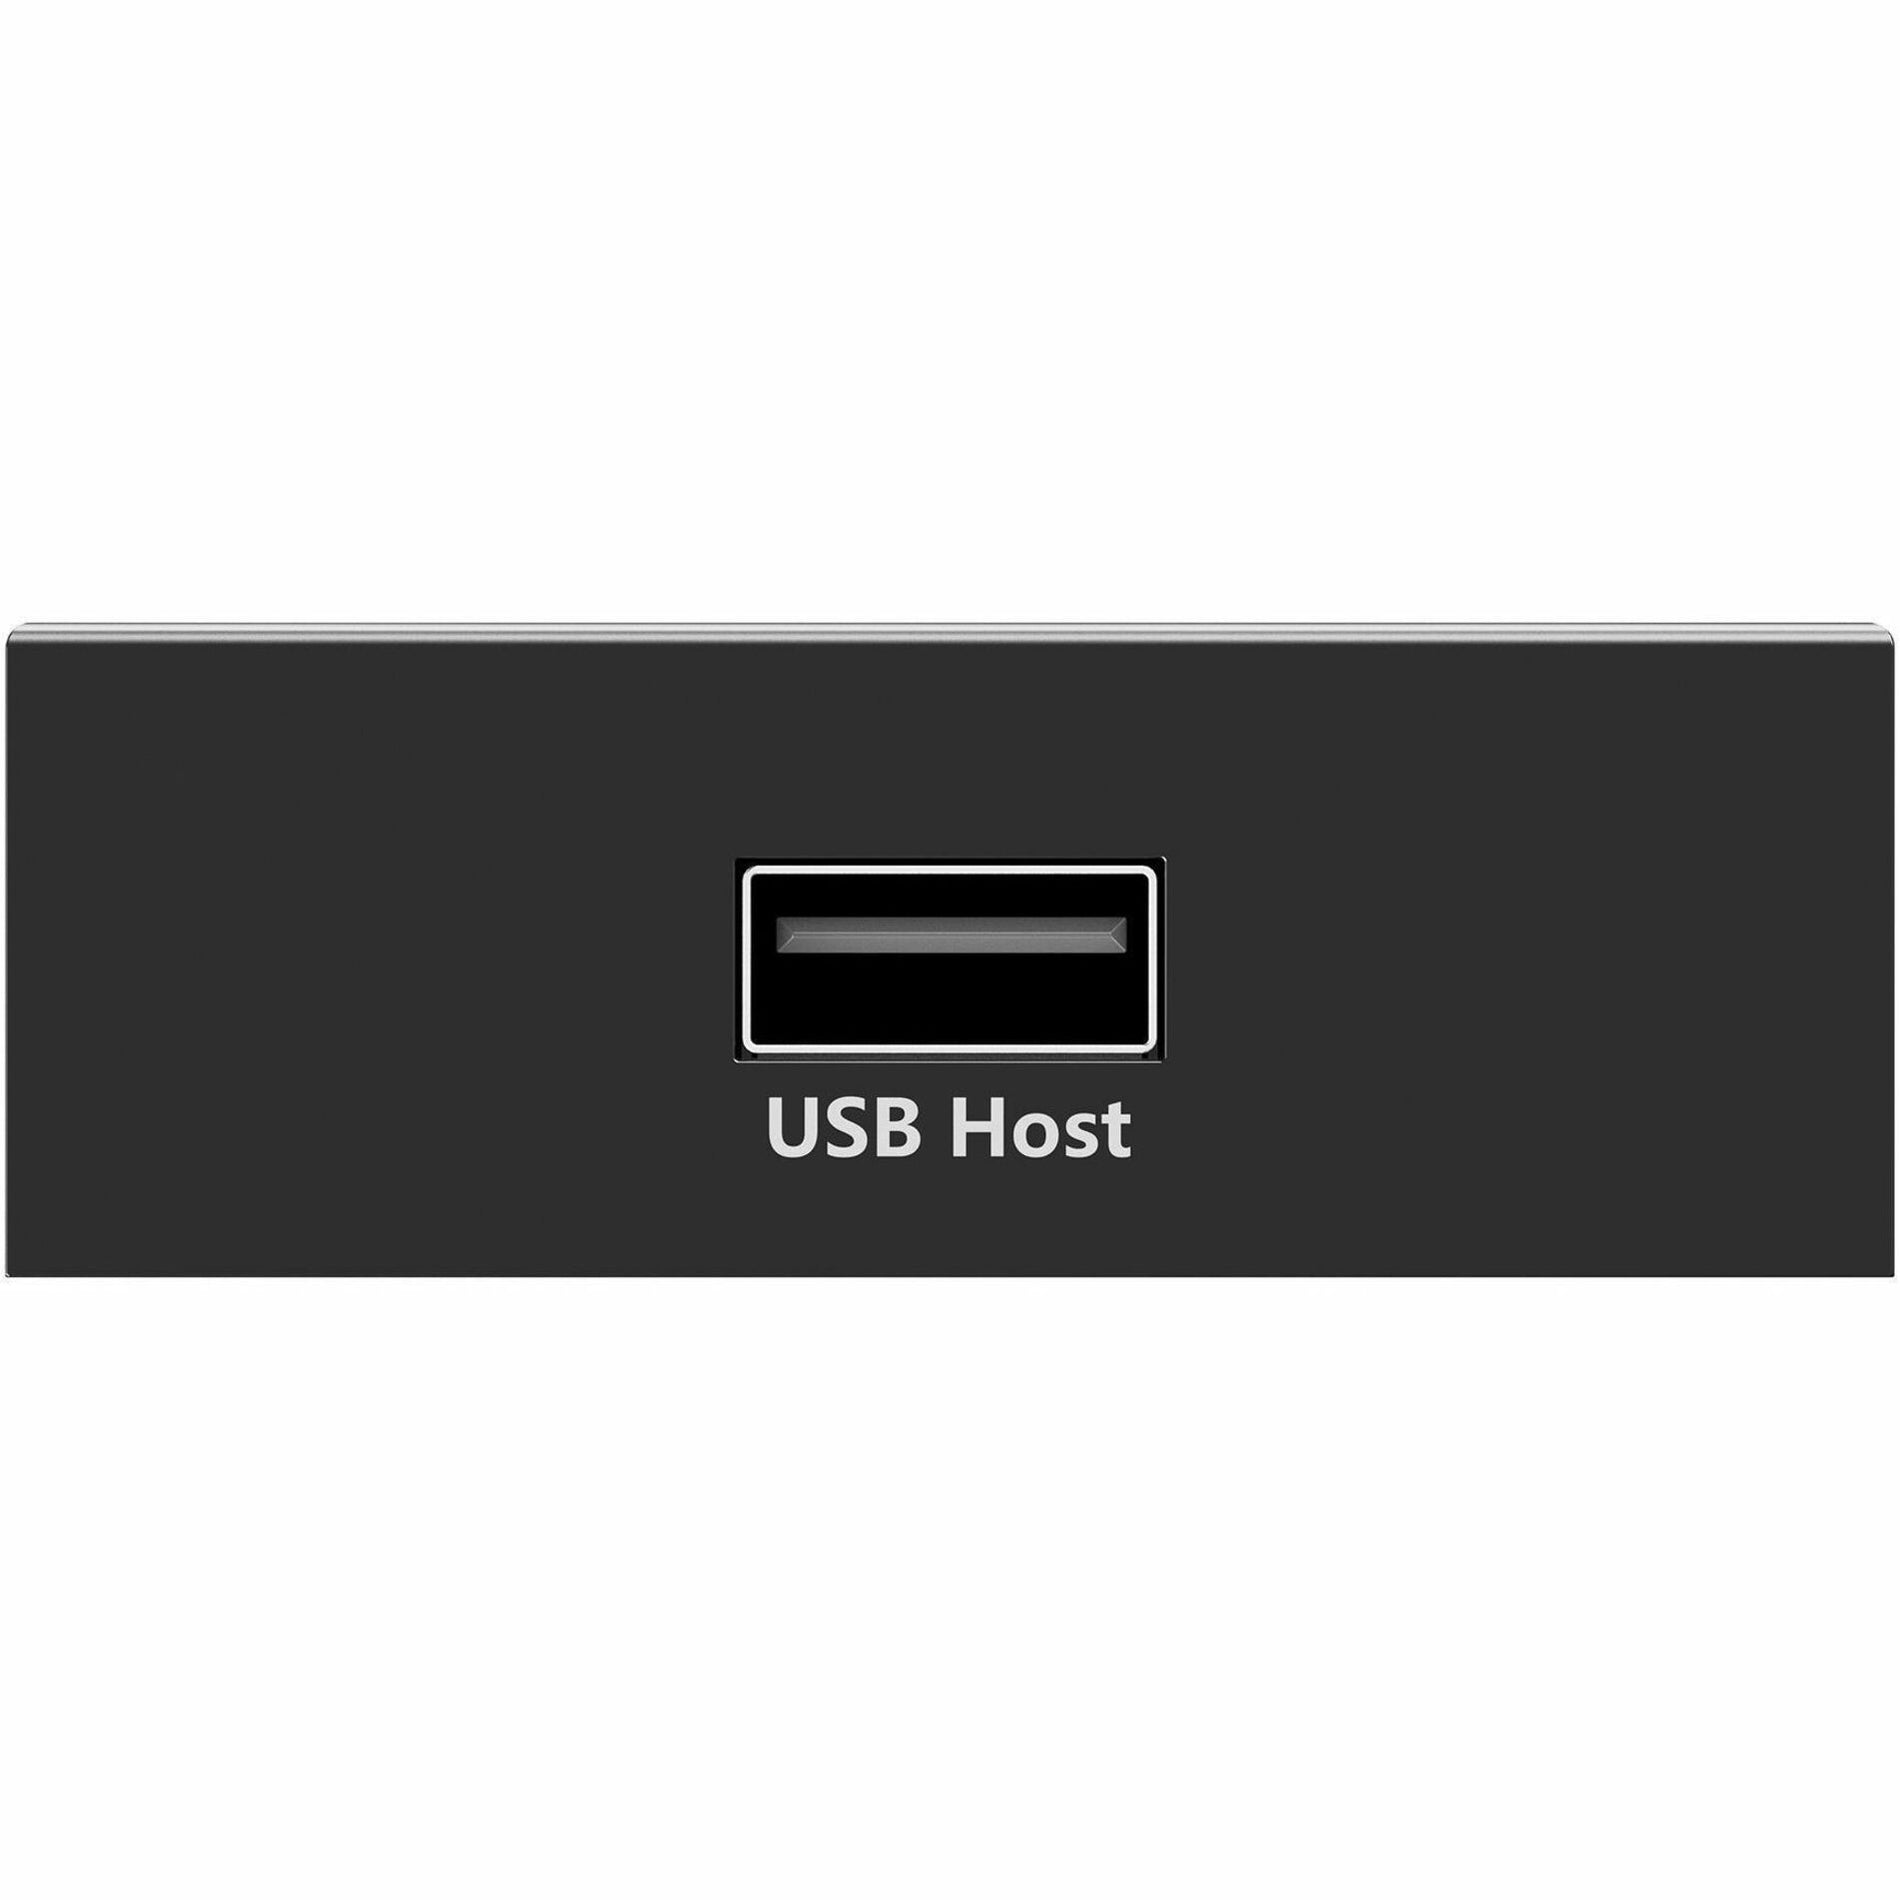 Rocstor Y10G004-B1 TrueReach 4 Port USB 2.0 Over Cat5/Cat6/Cat6a Extender Bus powered - Up to 492ft, USB Extender